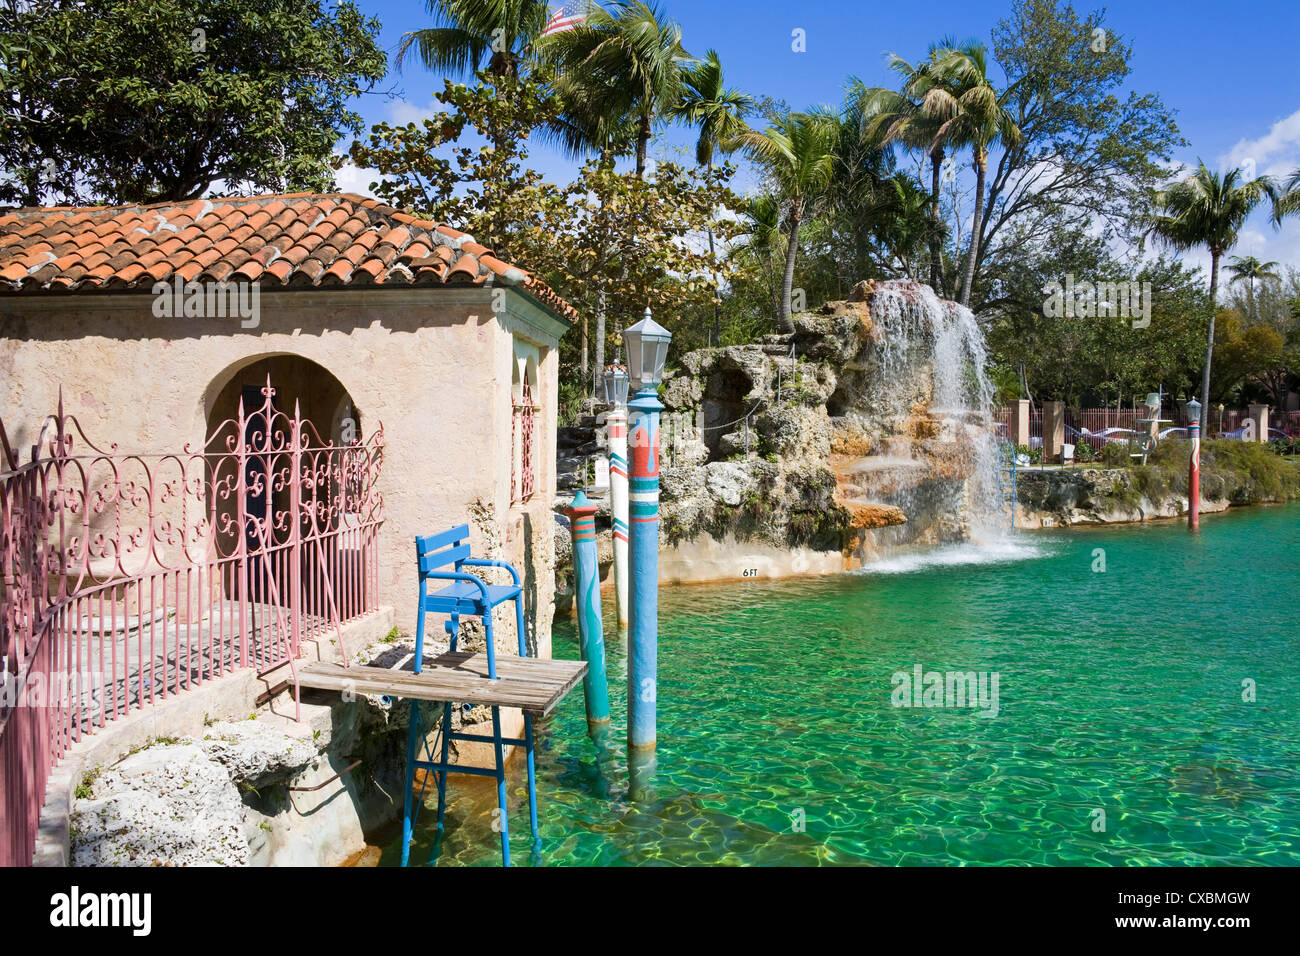 Venetian Pool, Coral Gables, Miami, Florida, United States of America, North America Stock Photo